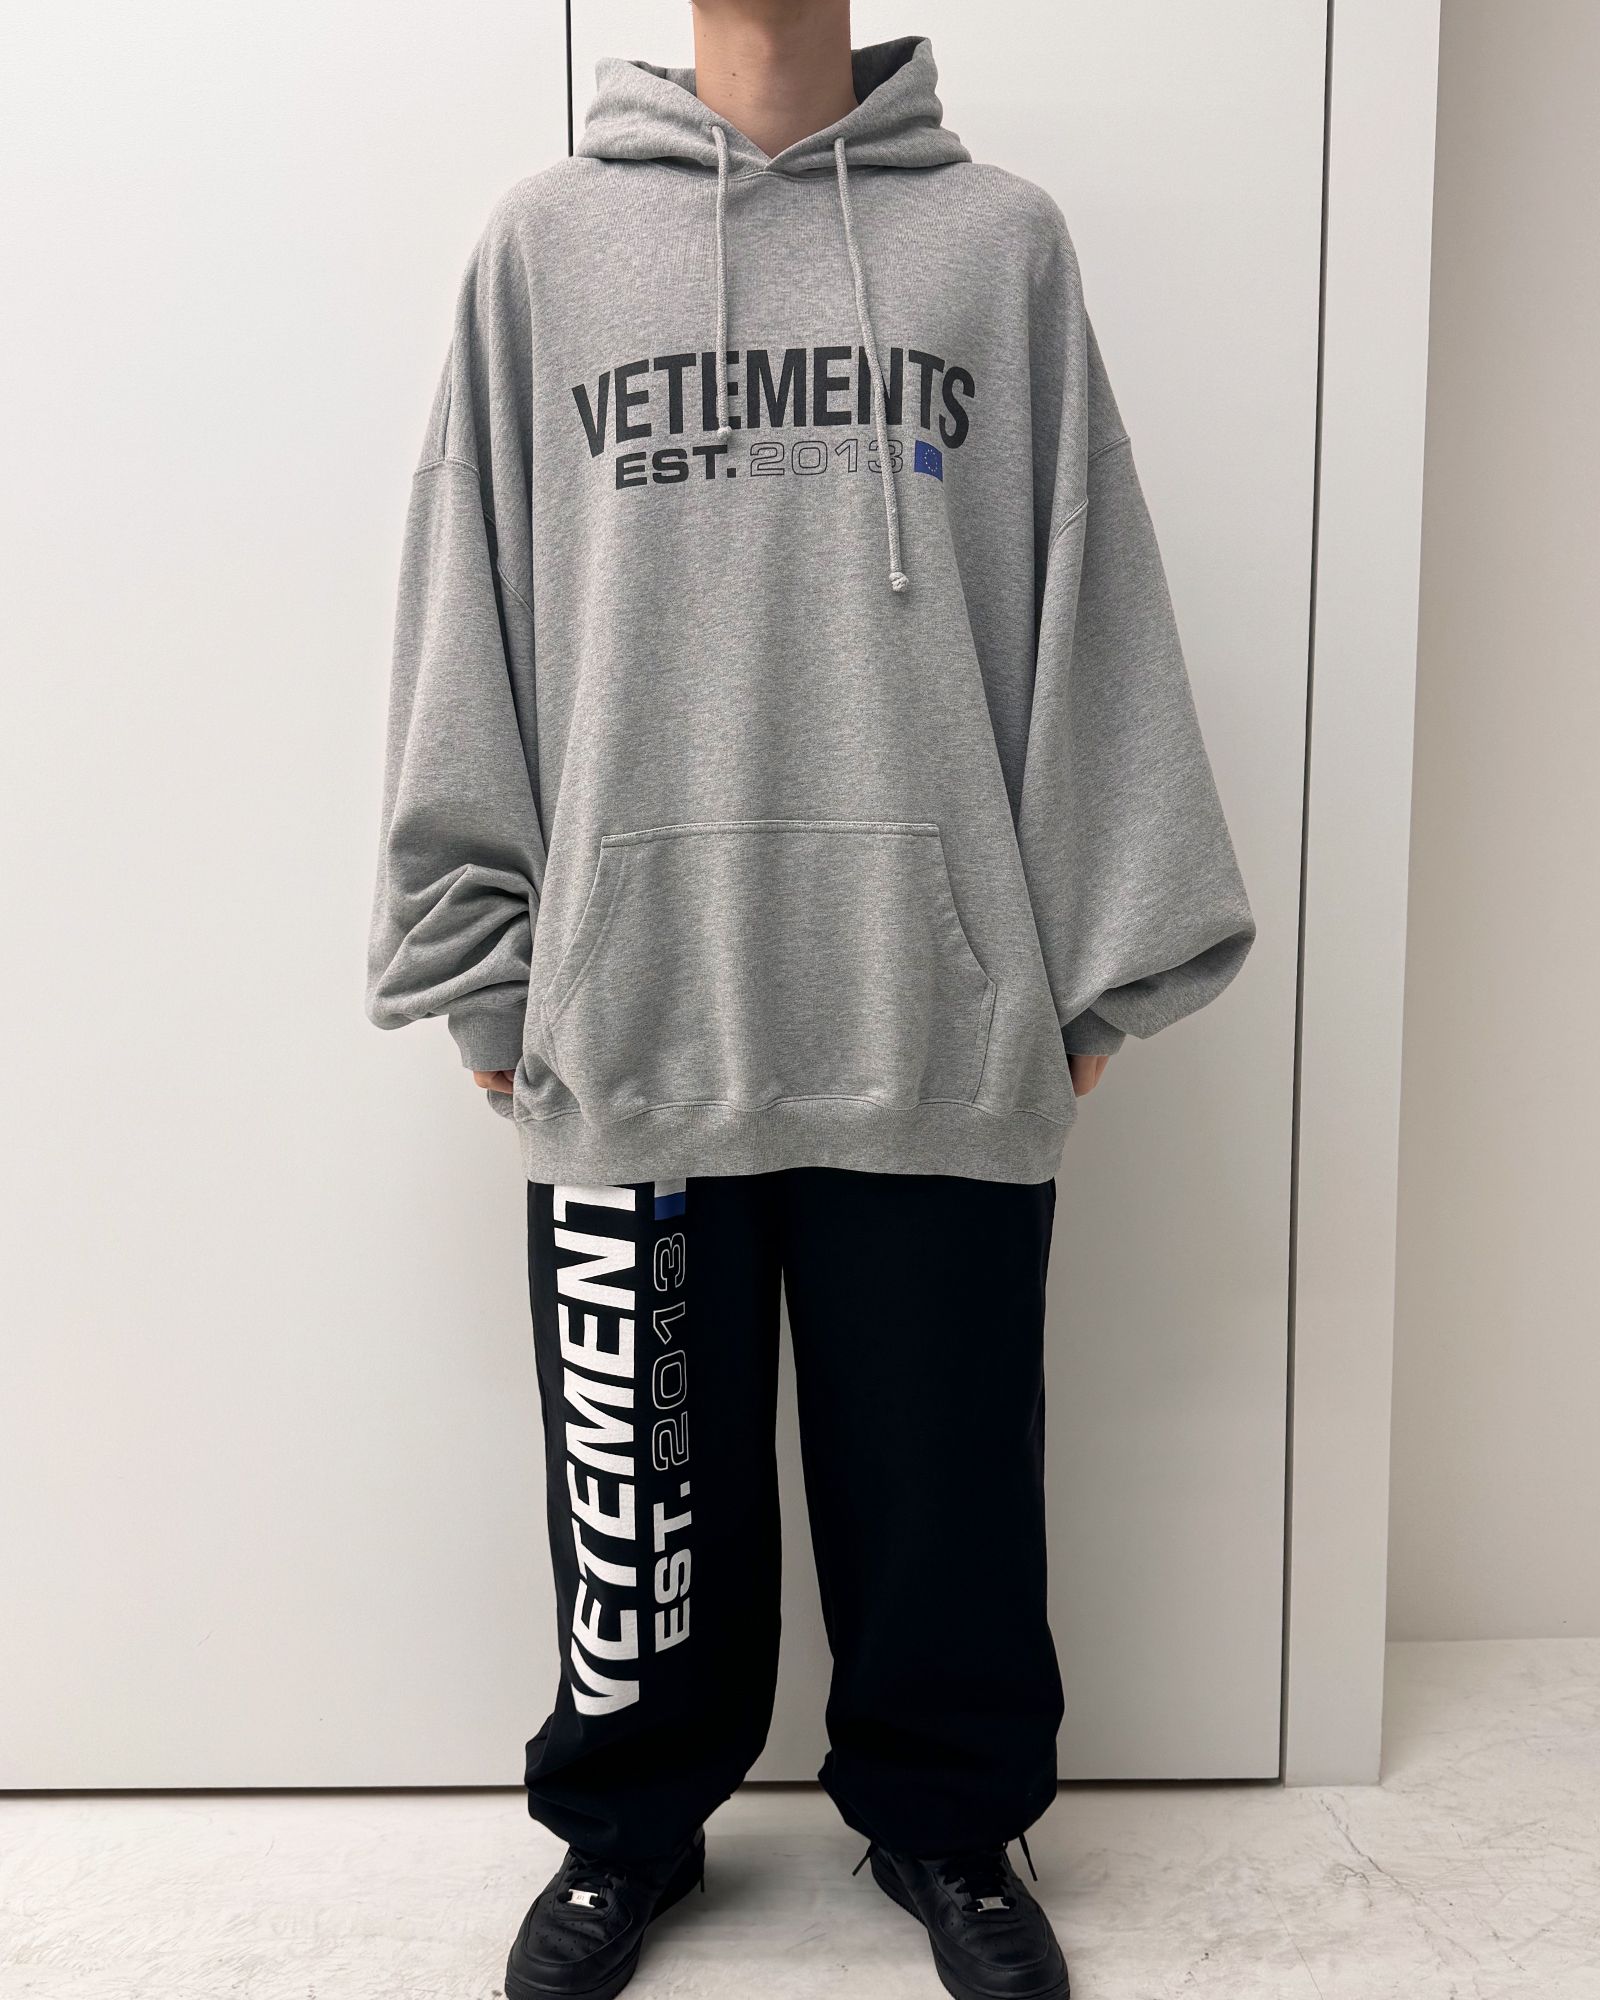 VETEMENTS - ヴェトモン/Vegan logo hoodie/プルオーバーパーカー 